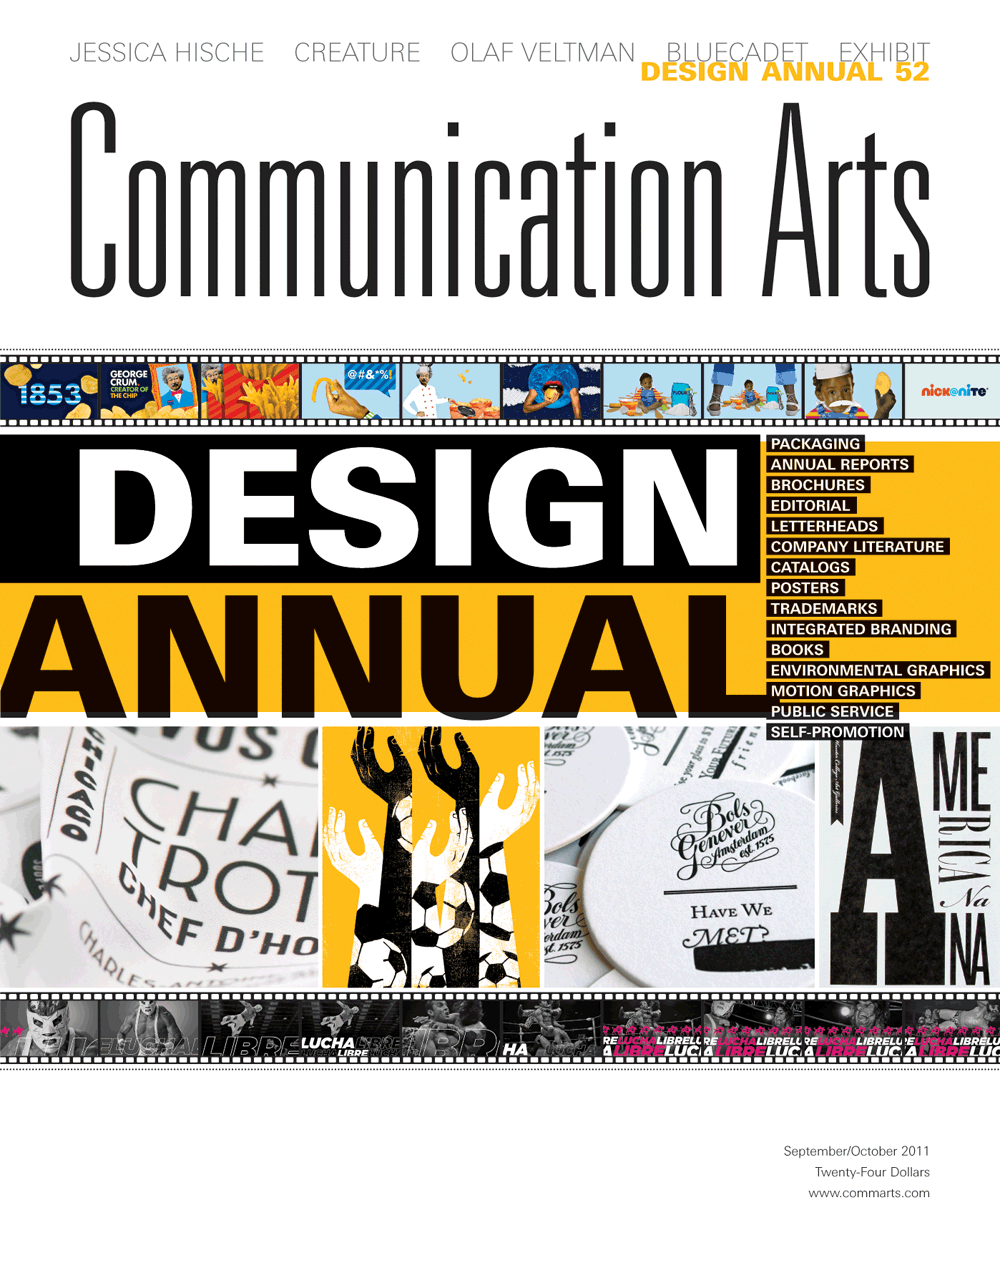 Communication Arts magazine: Cover, Sept/Oct 2011